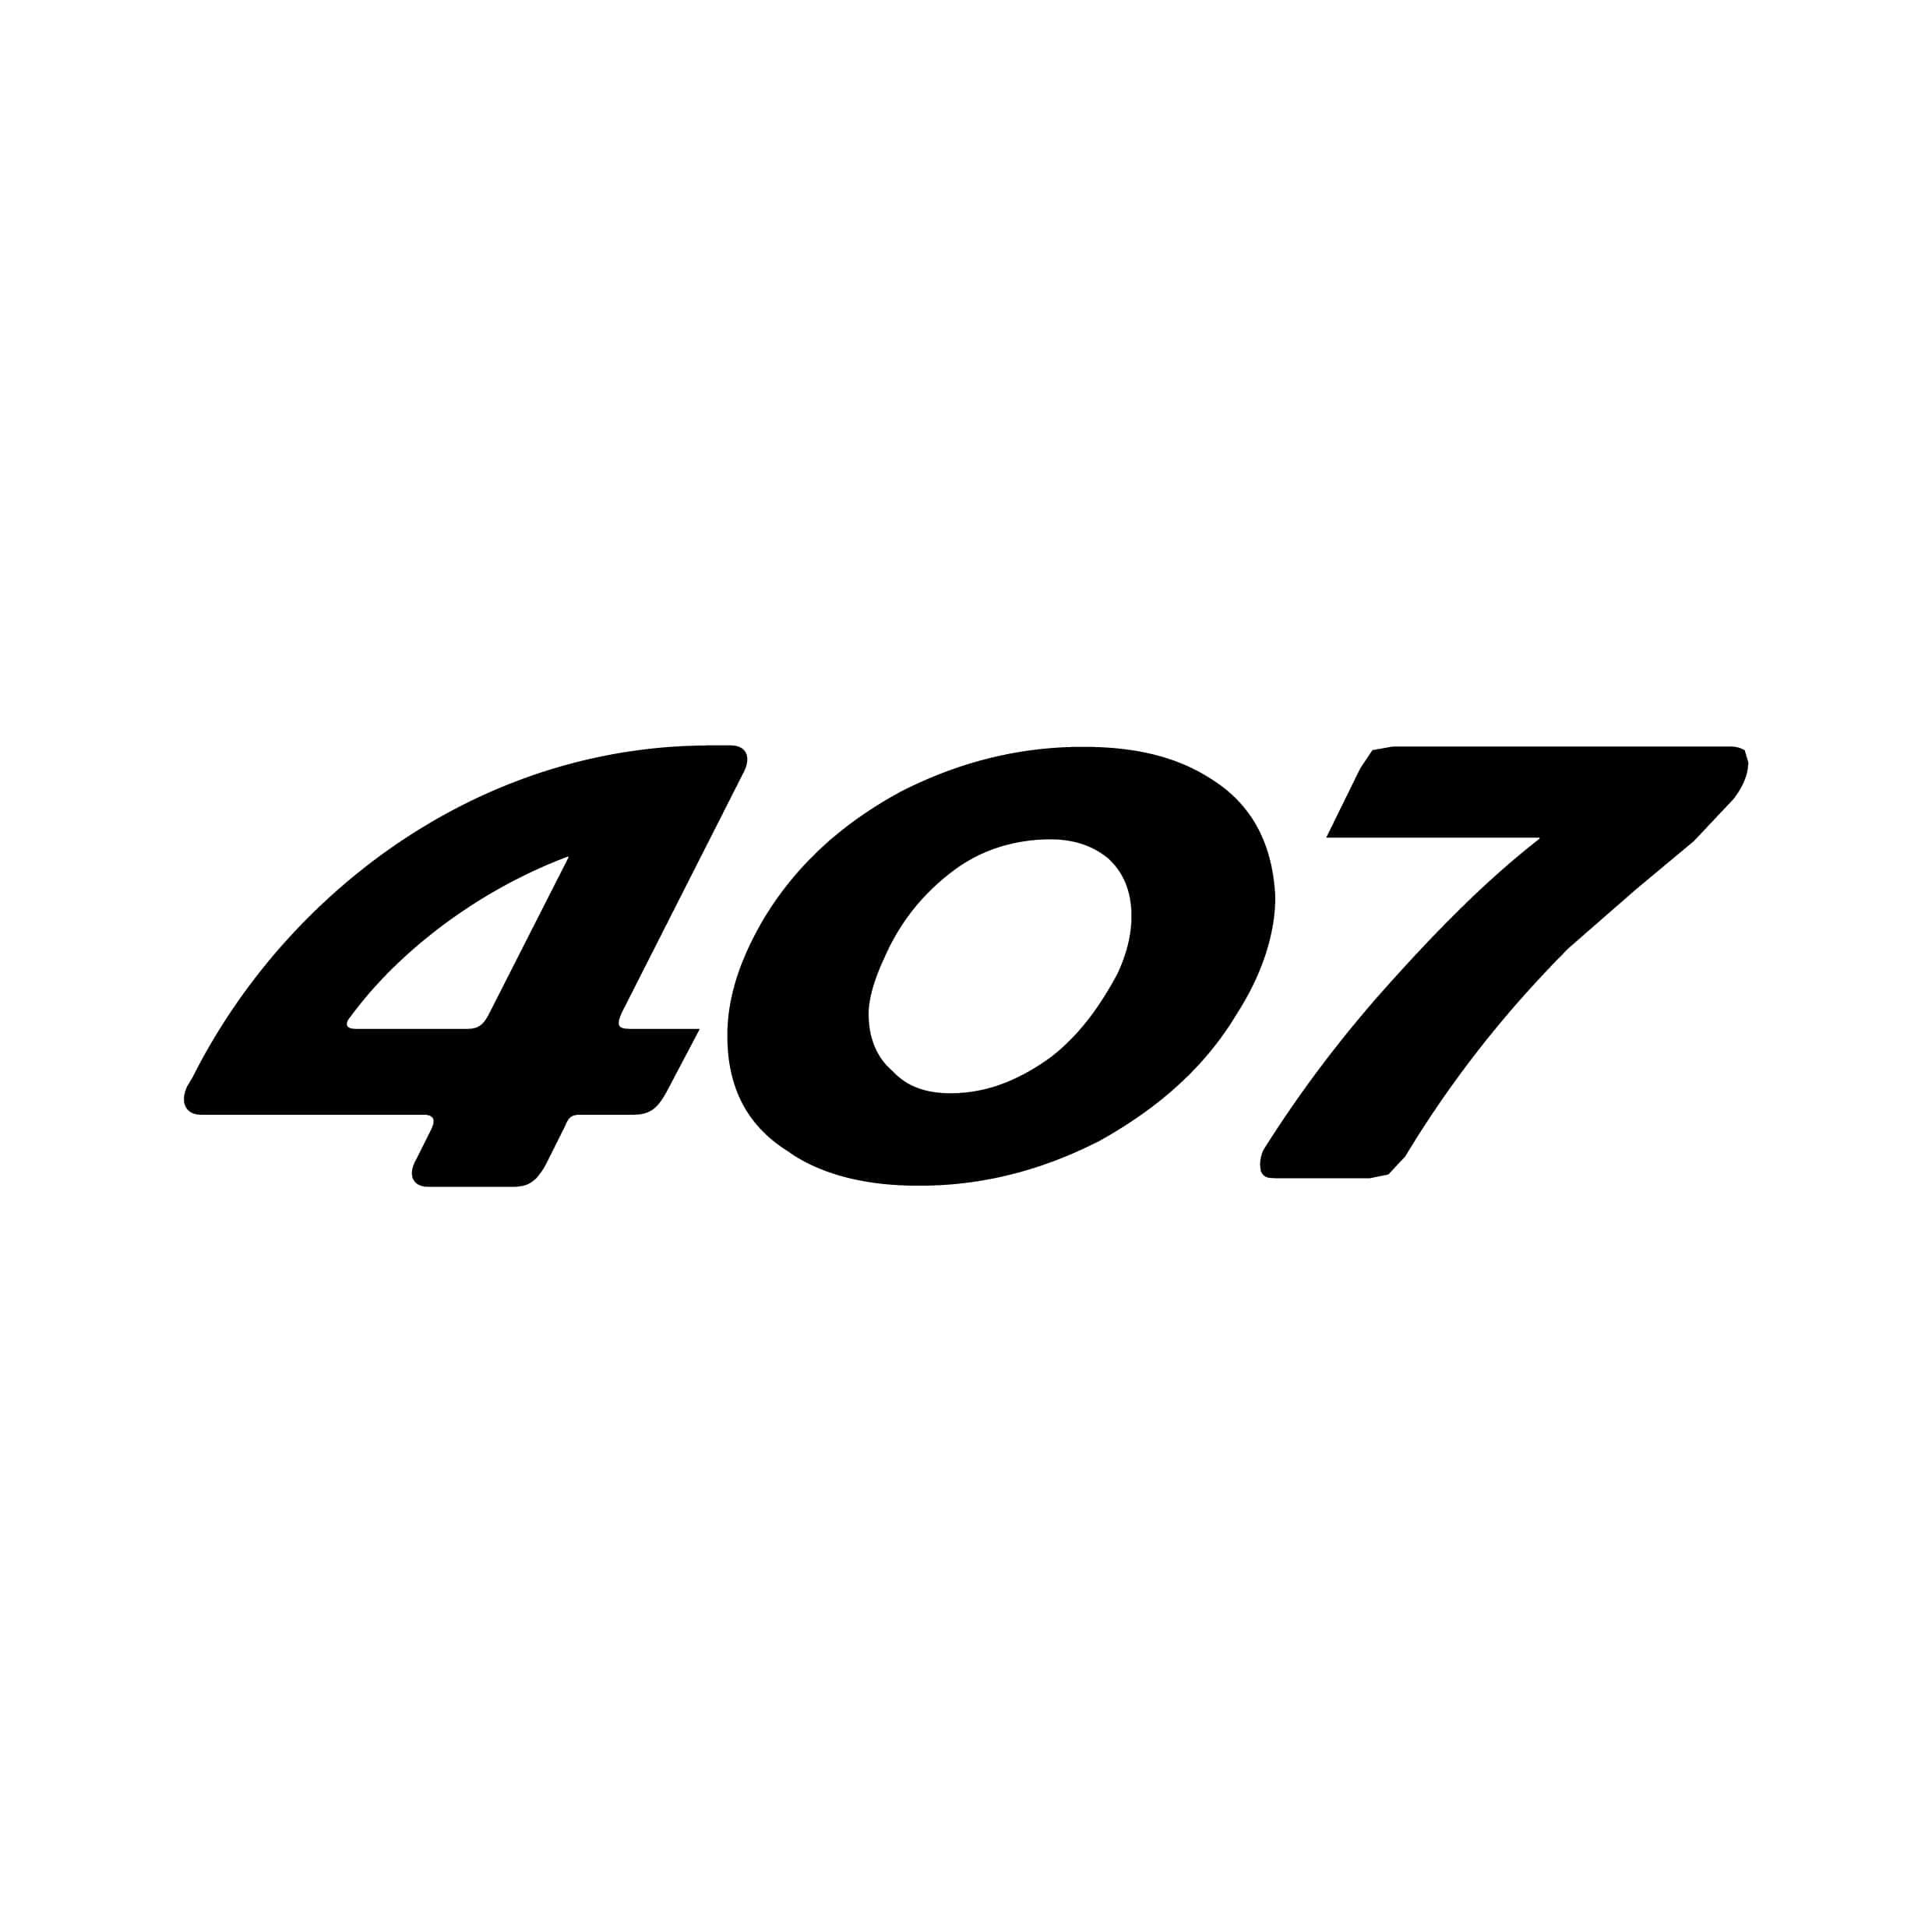 stickers-peugeot-407-ref34-autocollant-voiture-sticker-auto-autocollants-decals-sponsors-racing-tuning-sport-logo-min